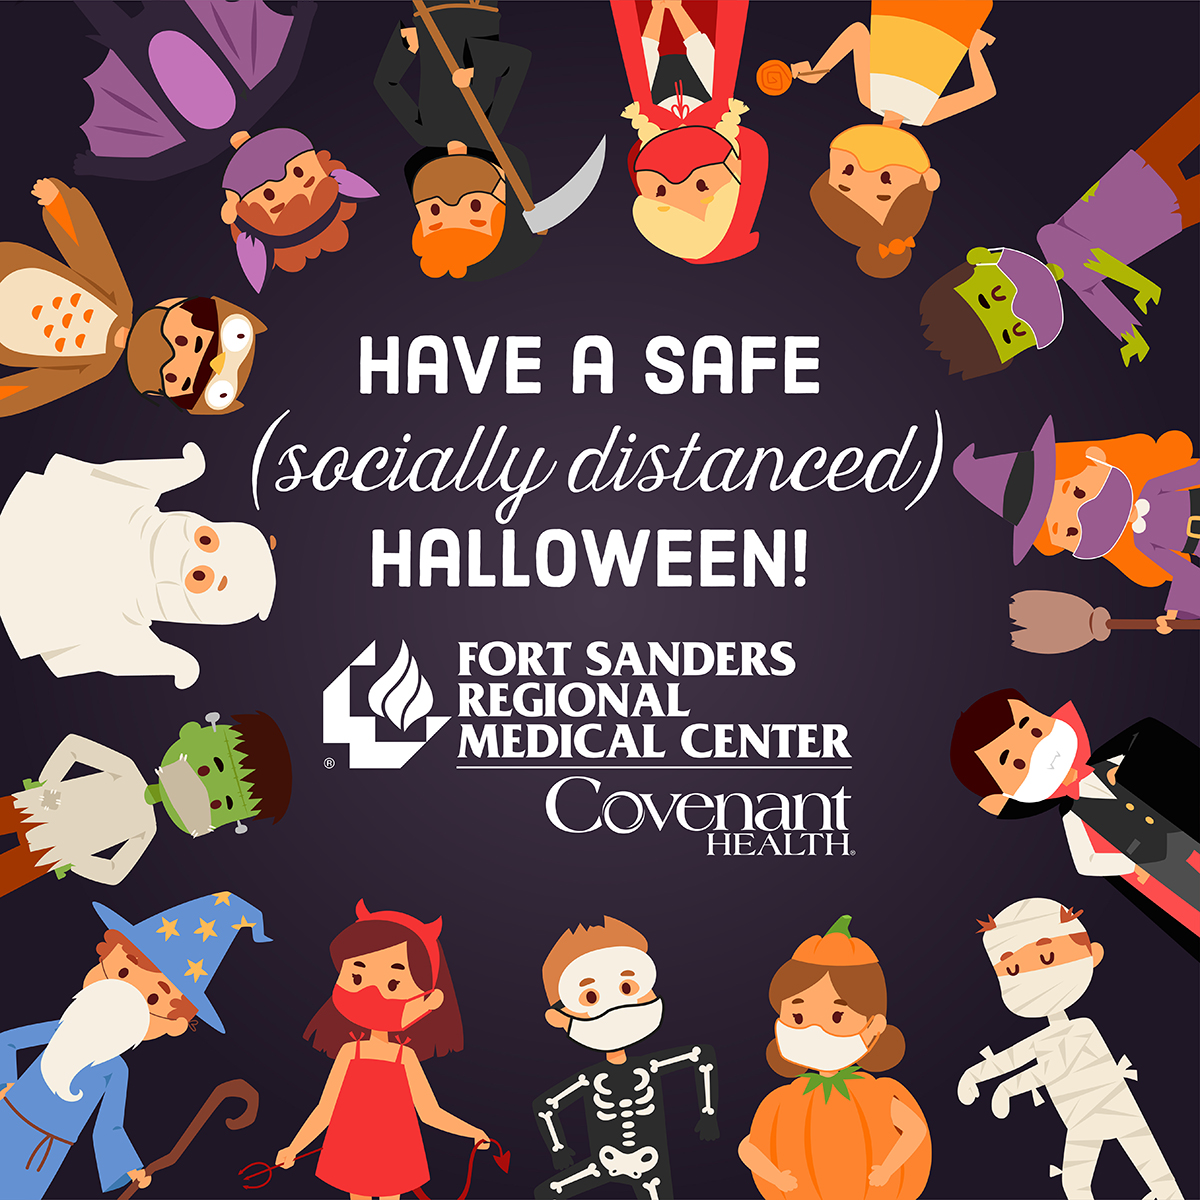 Have a safe socially distanced Halloween!